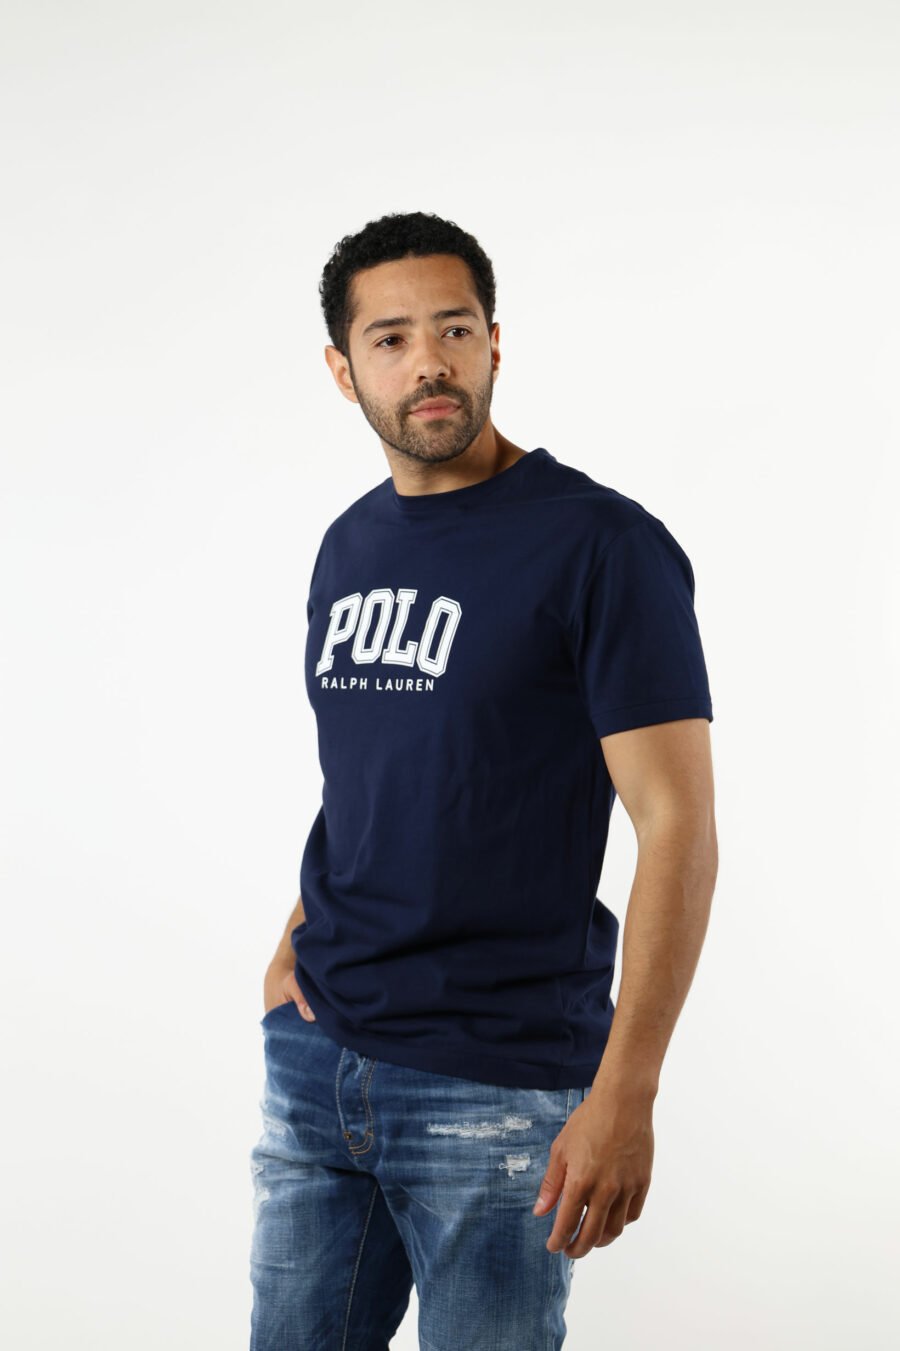 T-shirt bleu foncé avec maxilogo "polo" blanc - 111234